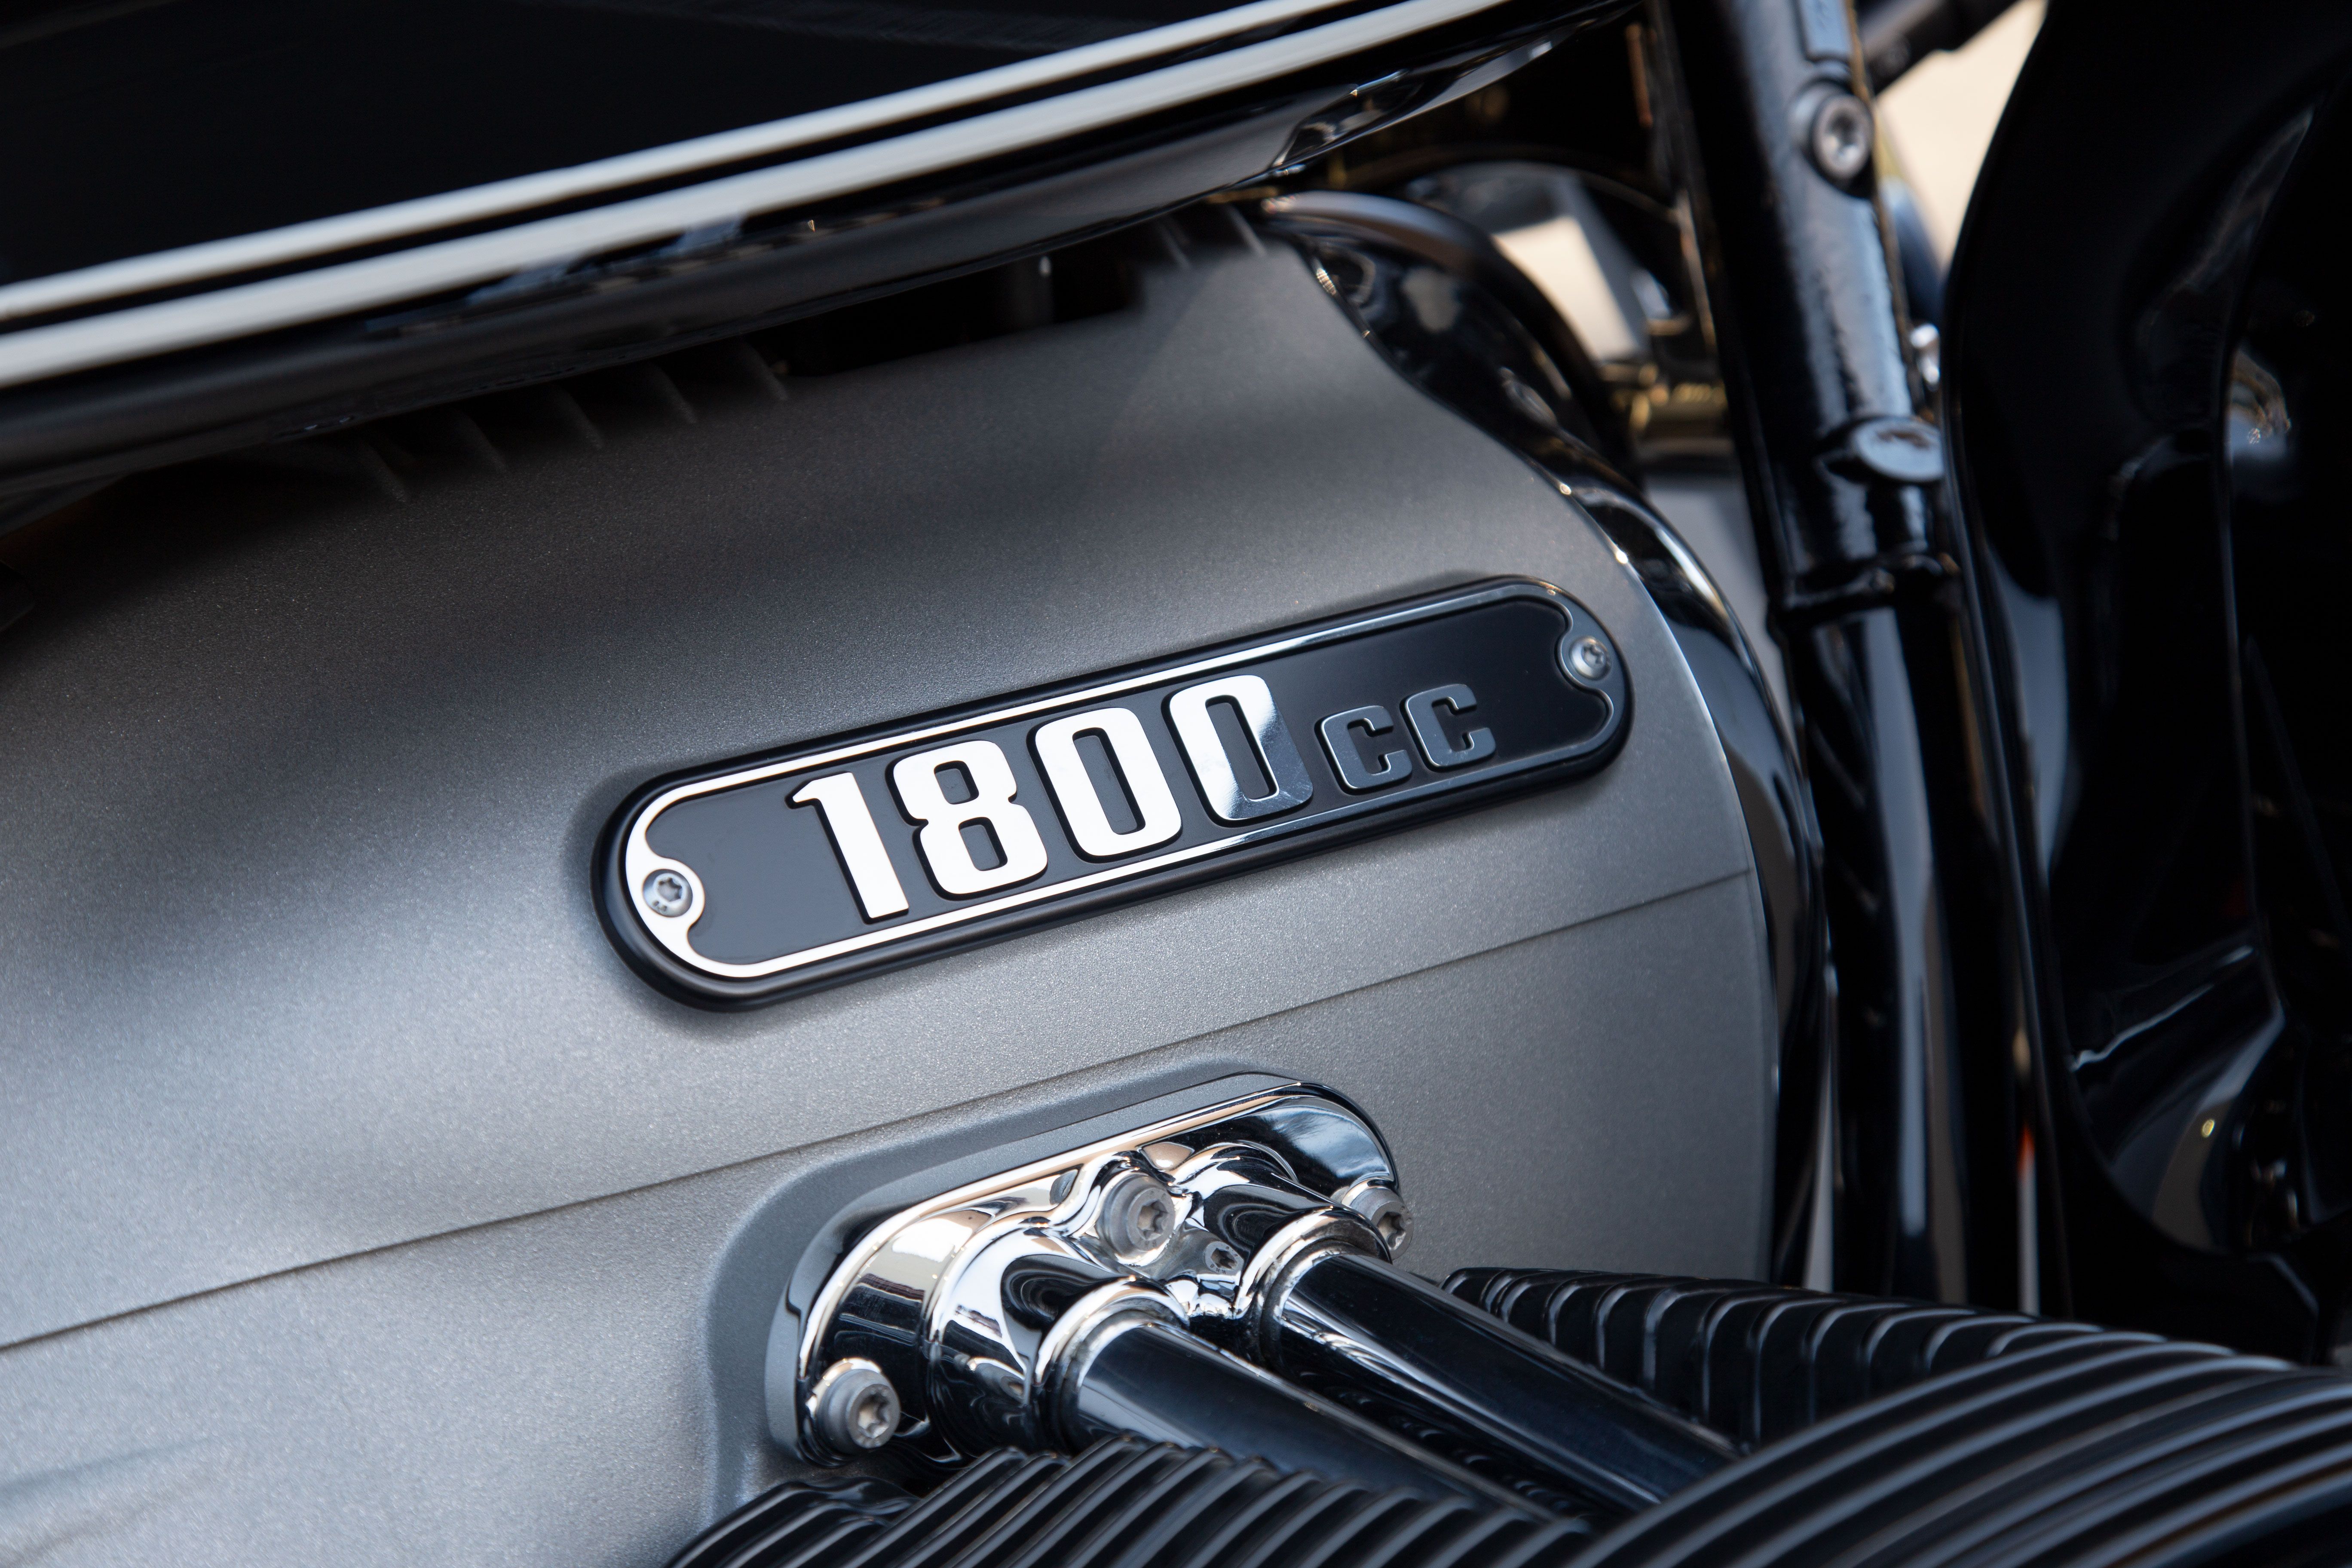 2022 BMW R18 Transcontinental Motorcycle 1800cc Big Boxer Engine